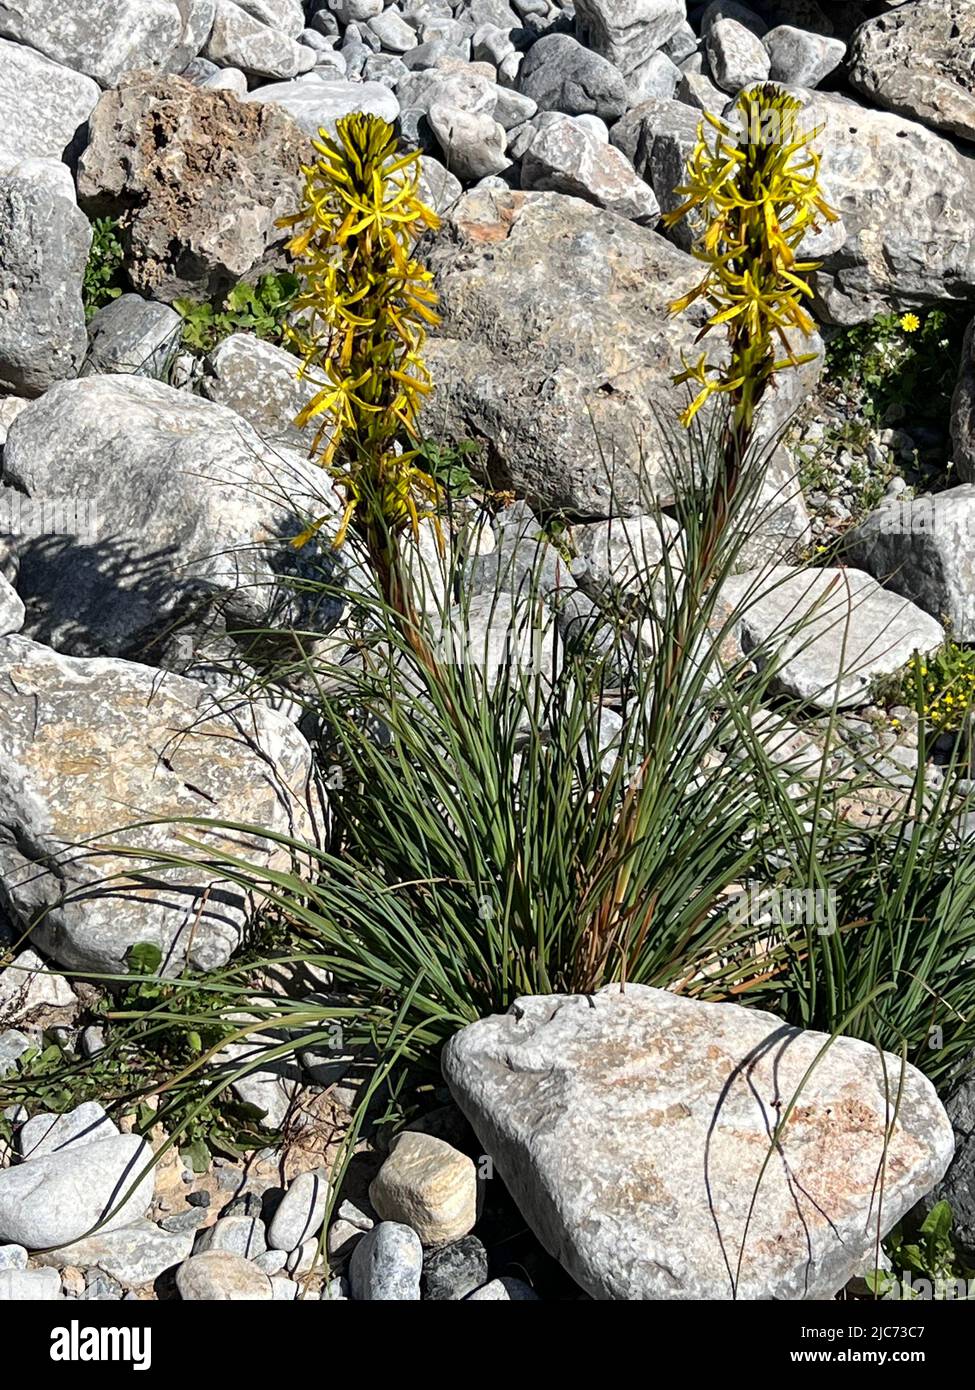 king's spear - Asphodeline lutea; Synonym: Asphodelus luteus - Gelber Affodil - Asphodéline jaune Stock Photo